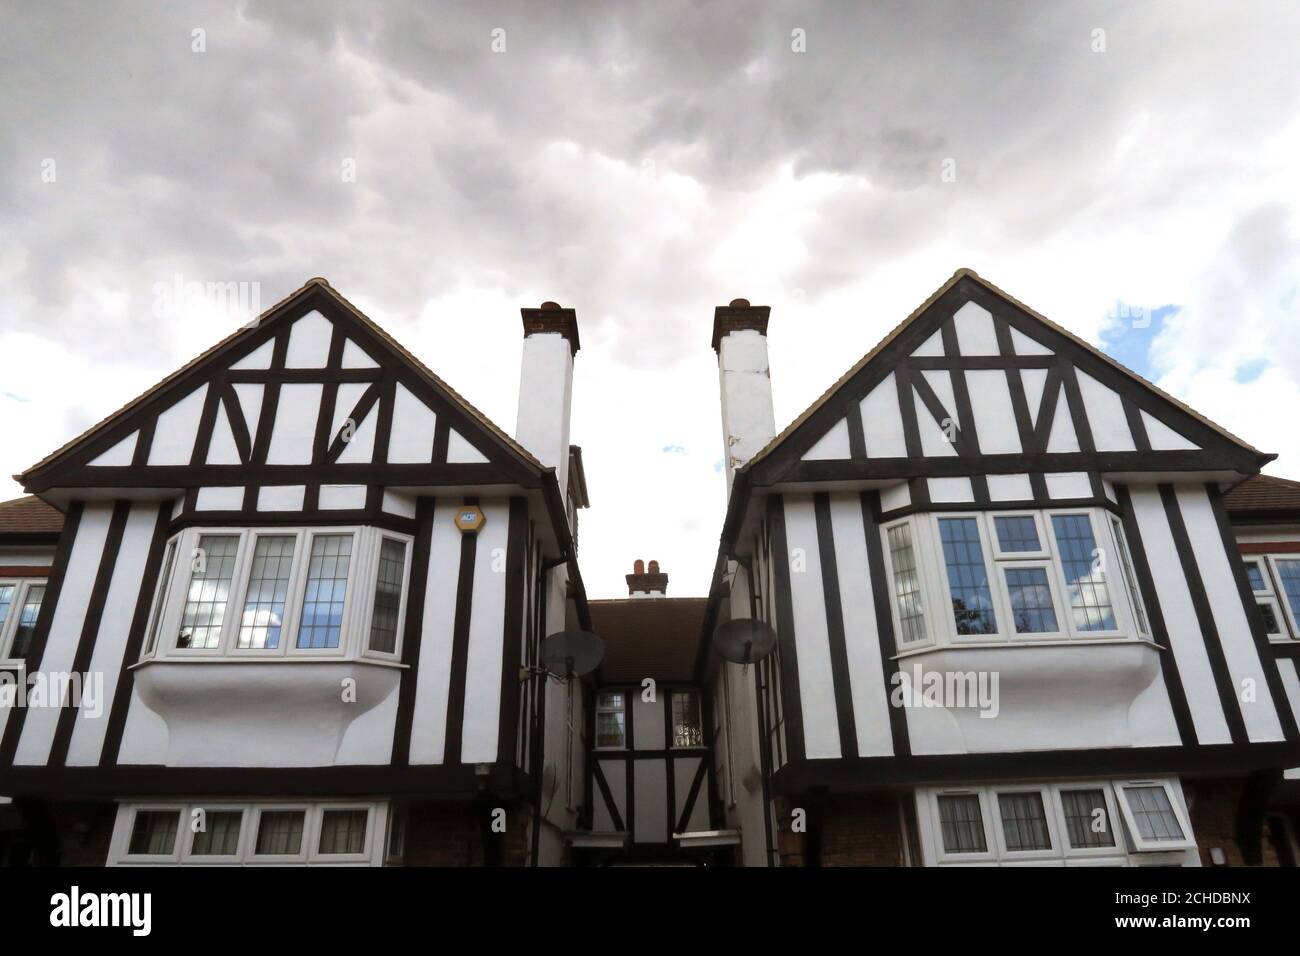 London Mock Tudor houses under stormy sky Stock Photo